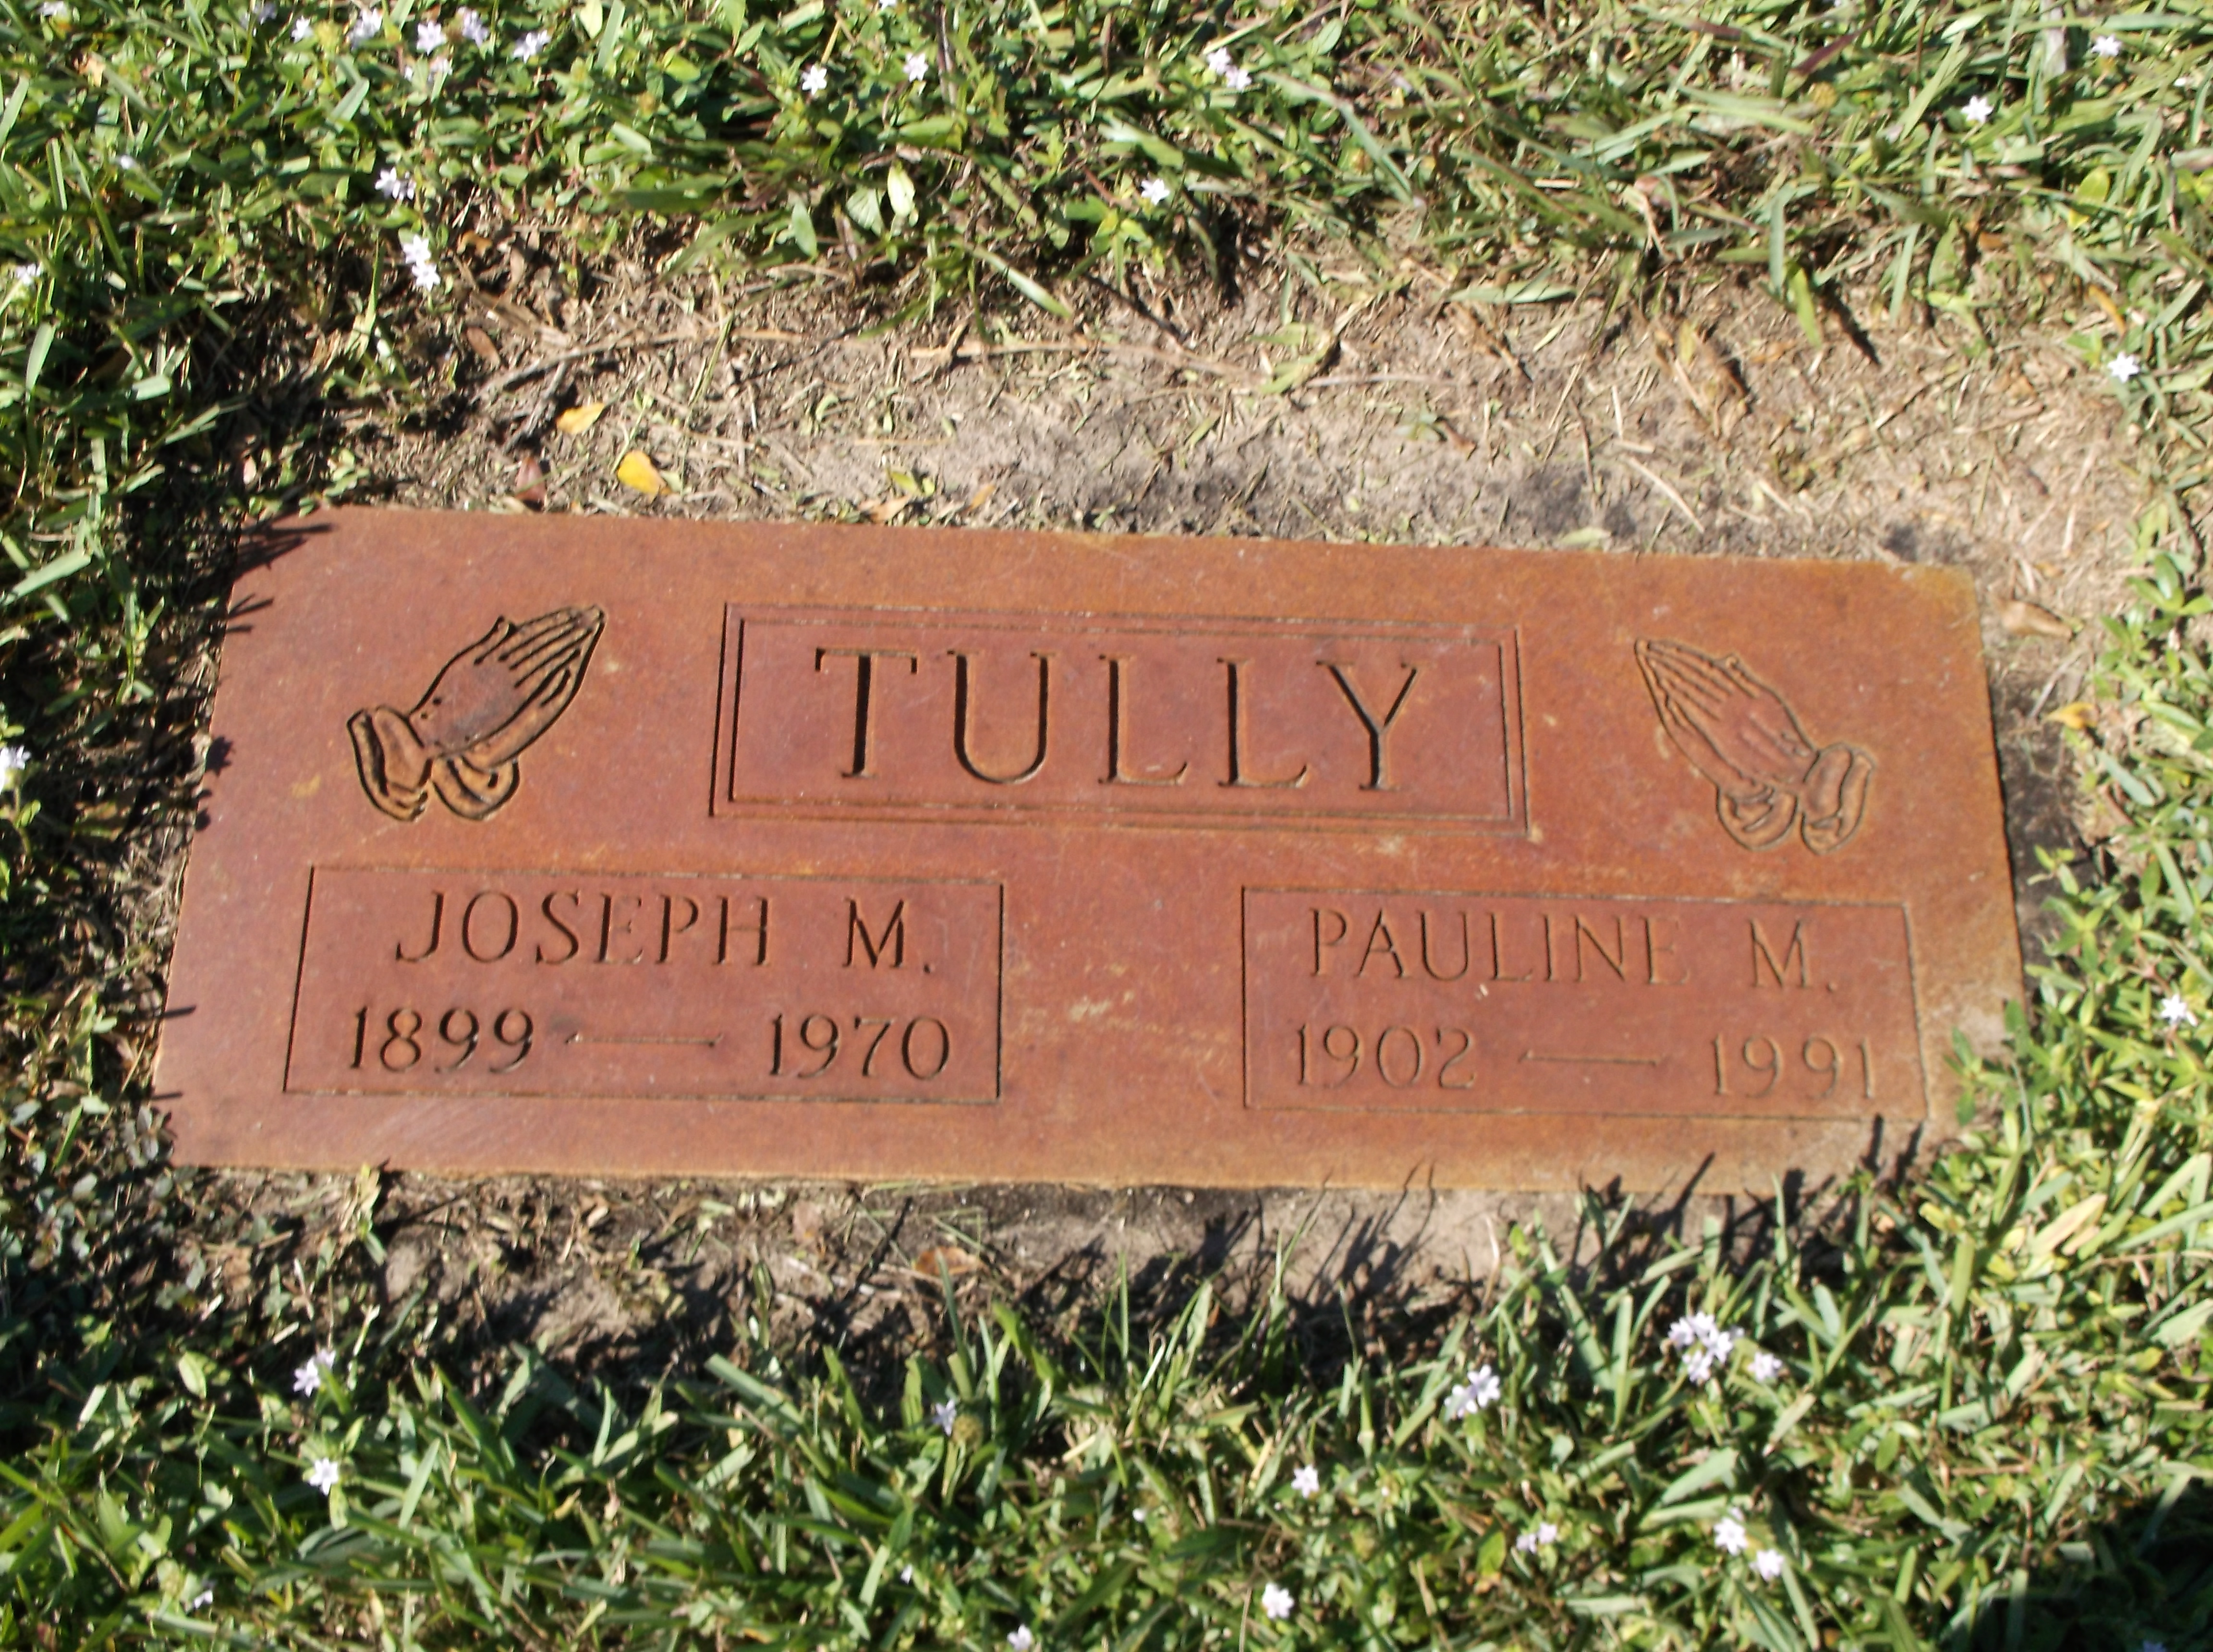 Joseph M Tully